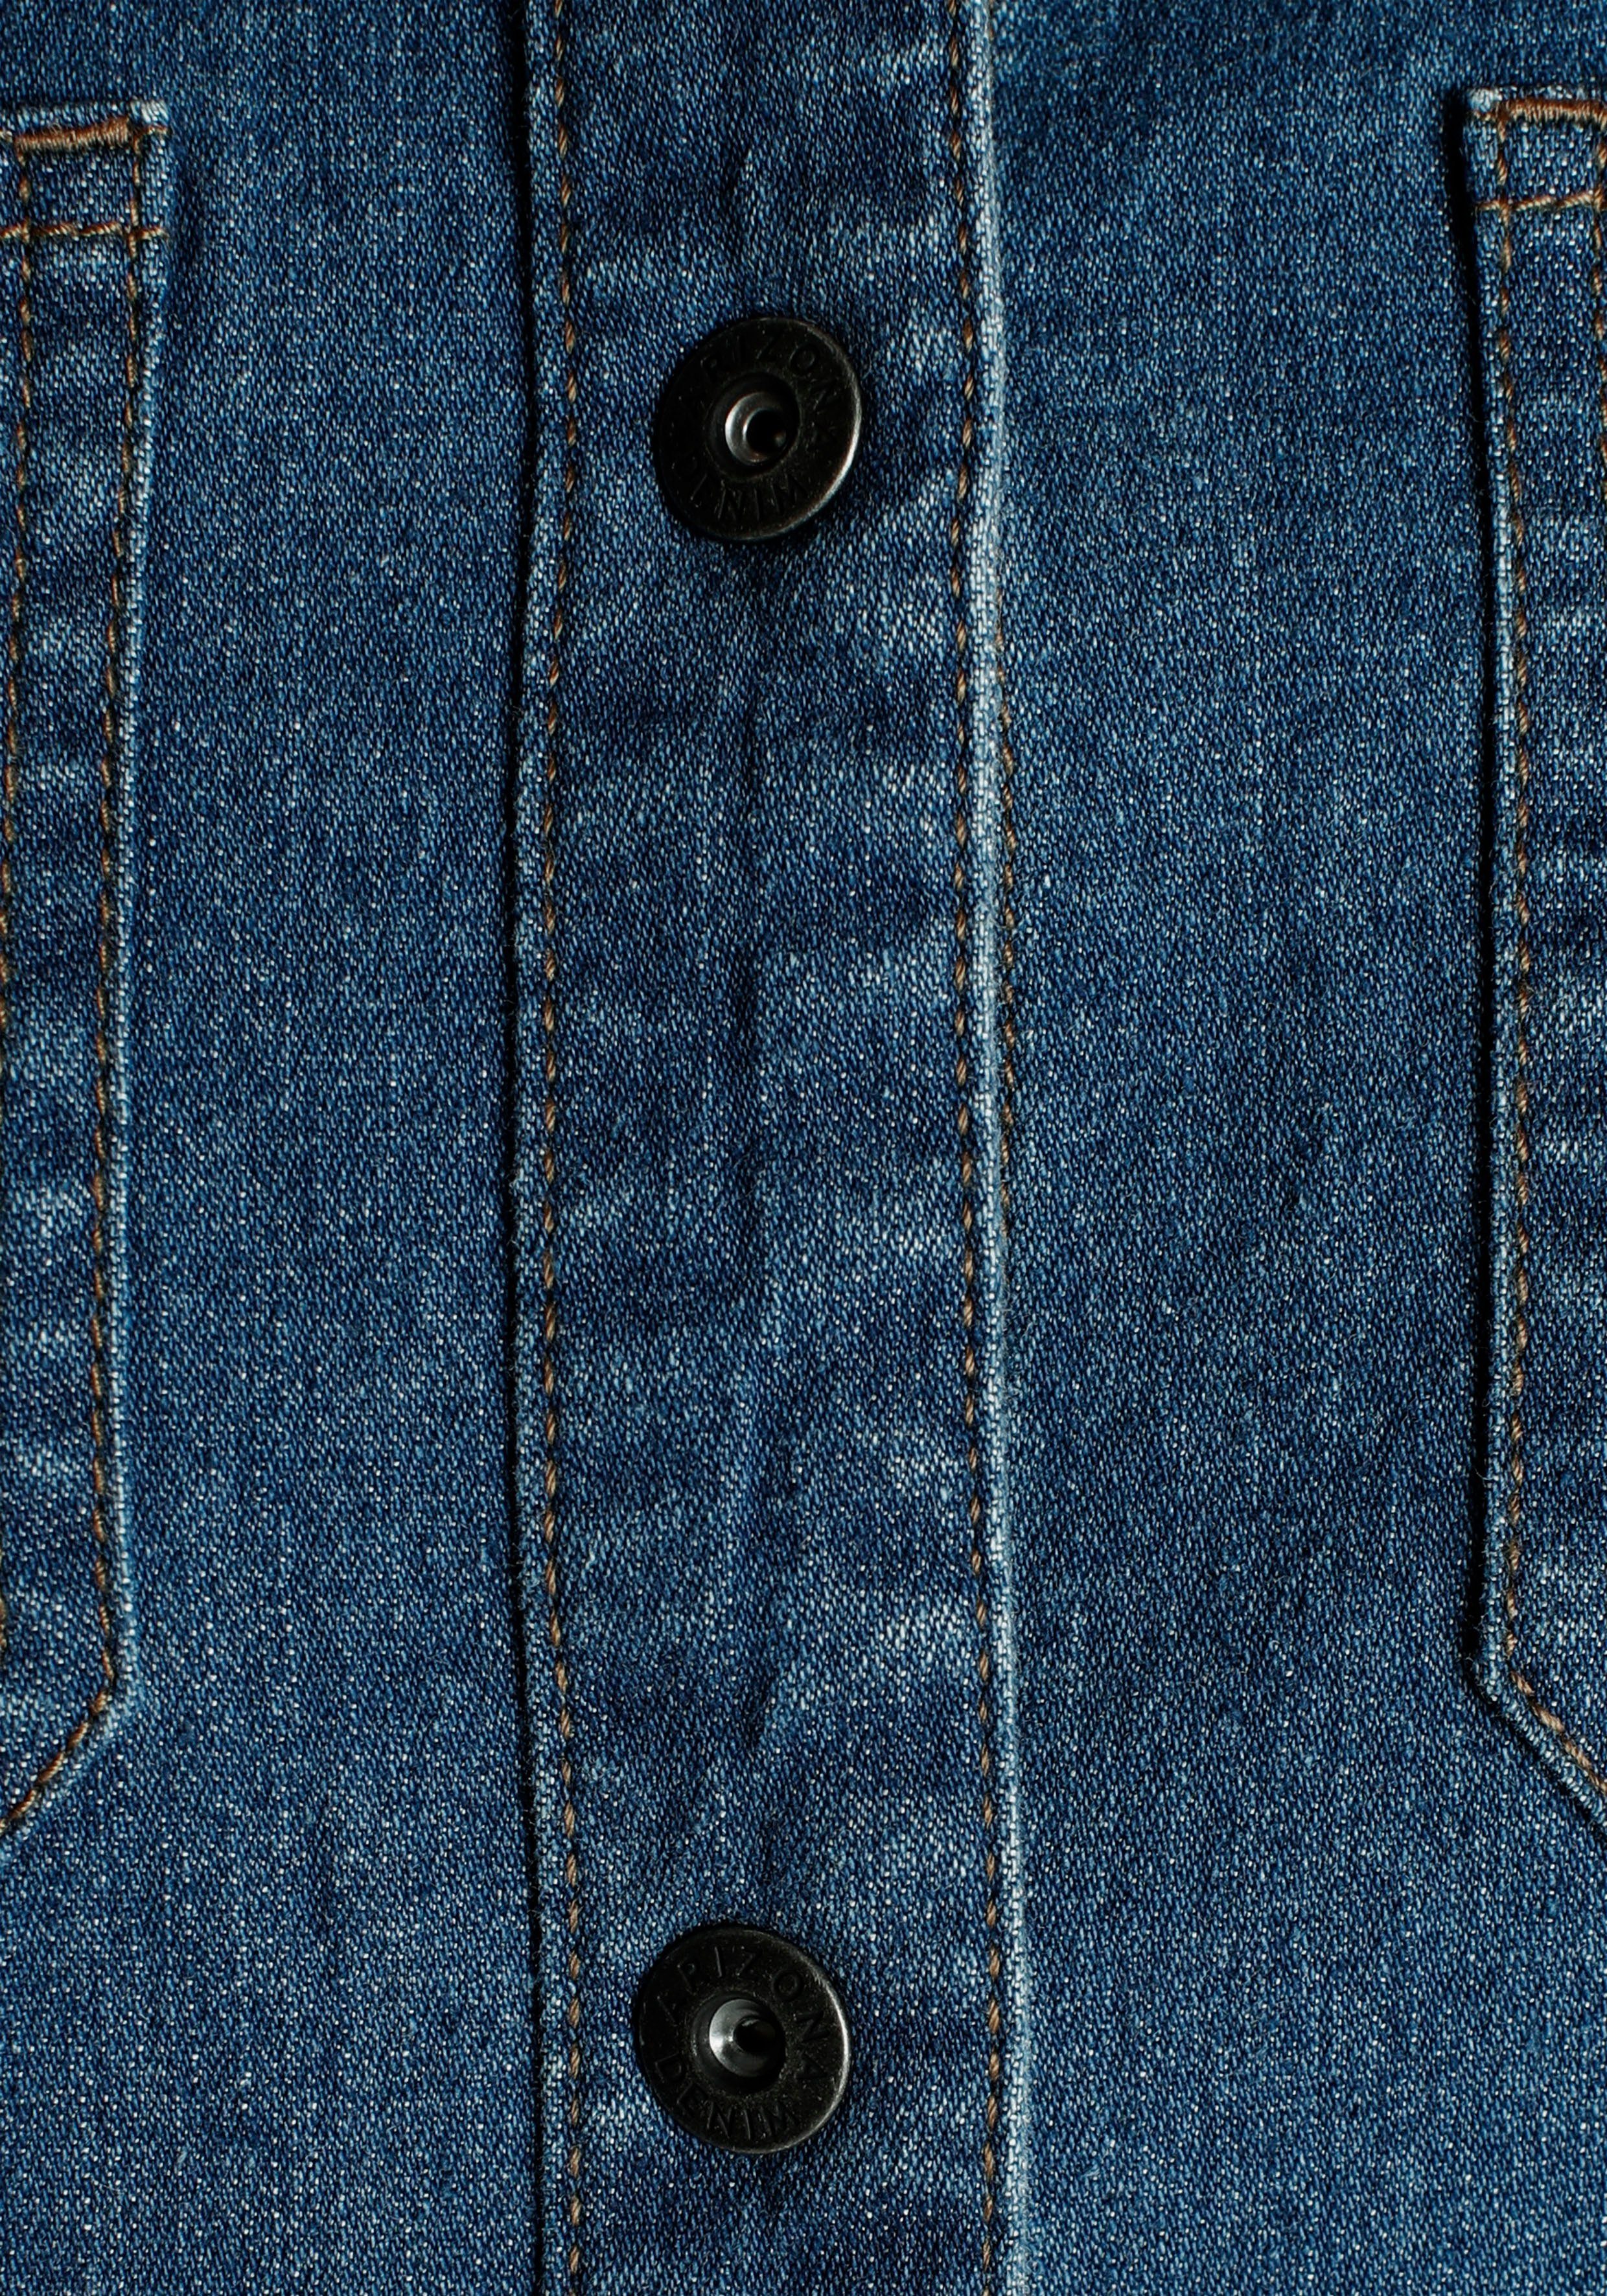 Arizona Jeansjacke Shacket dark Hemdjacke geschnitten - Denim blue Weiter used